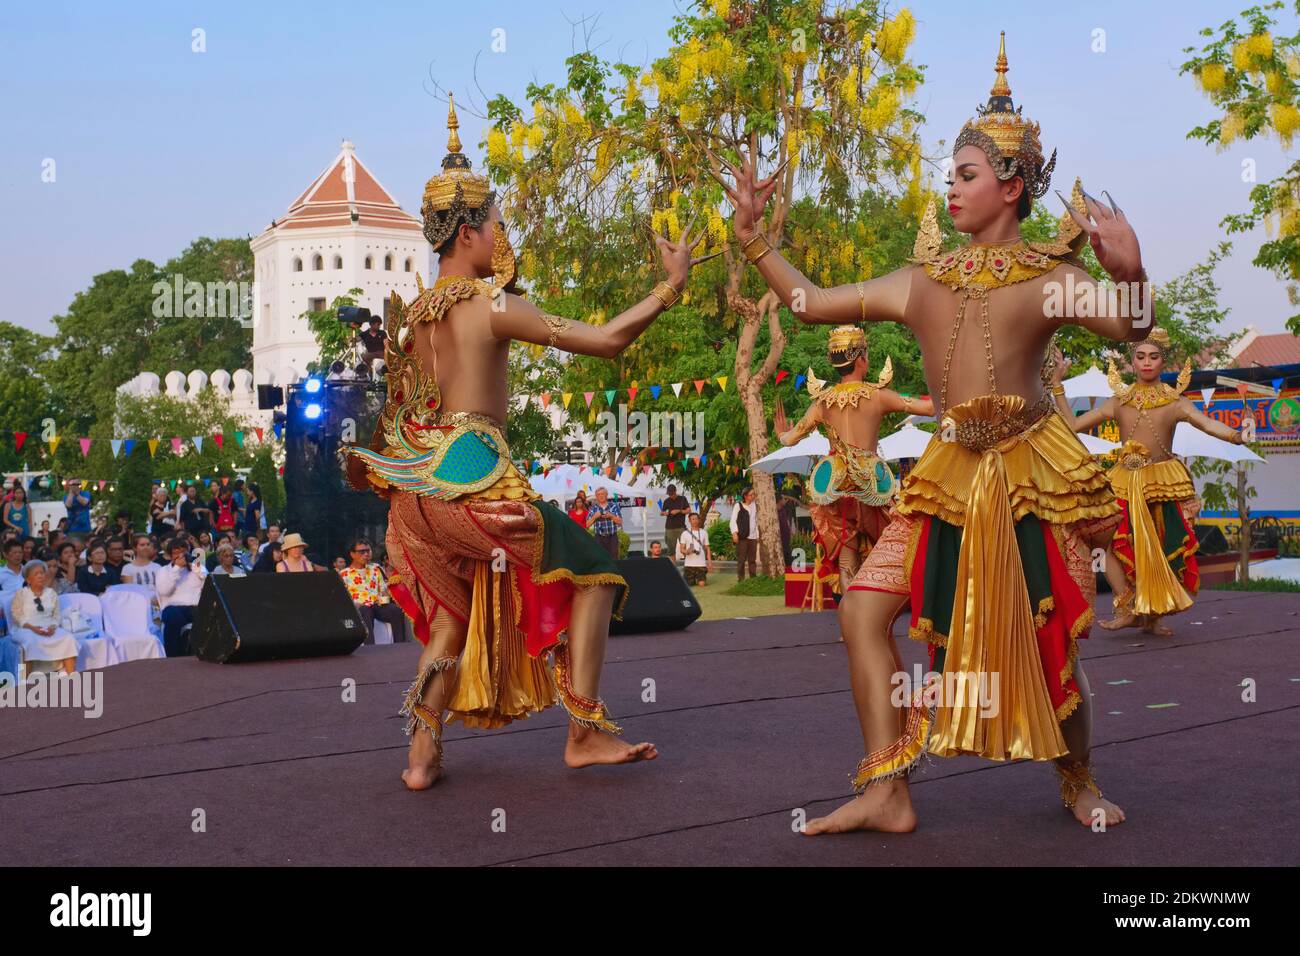 Male Thai dancers in traditional costume in an open-air performance of traditional Thai dance at Santichaiprakarn Park, Banglamphoo, Bangkok, Thailand Stock Photo